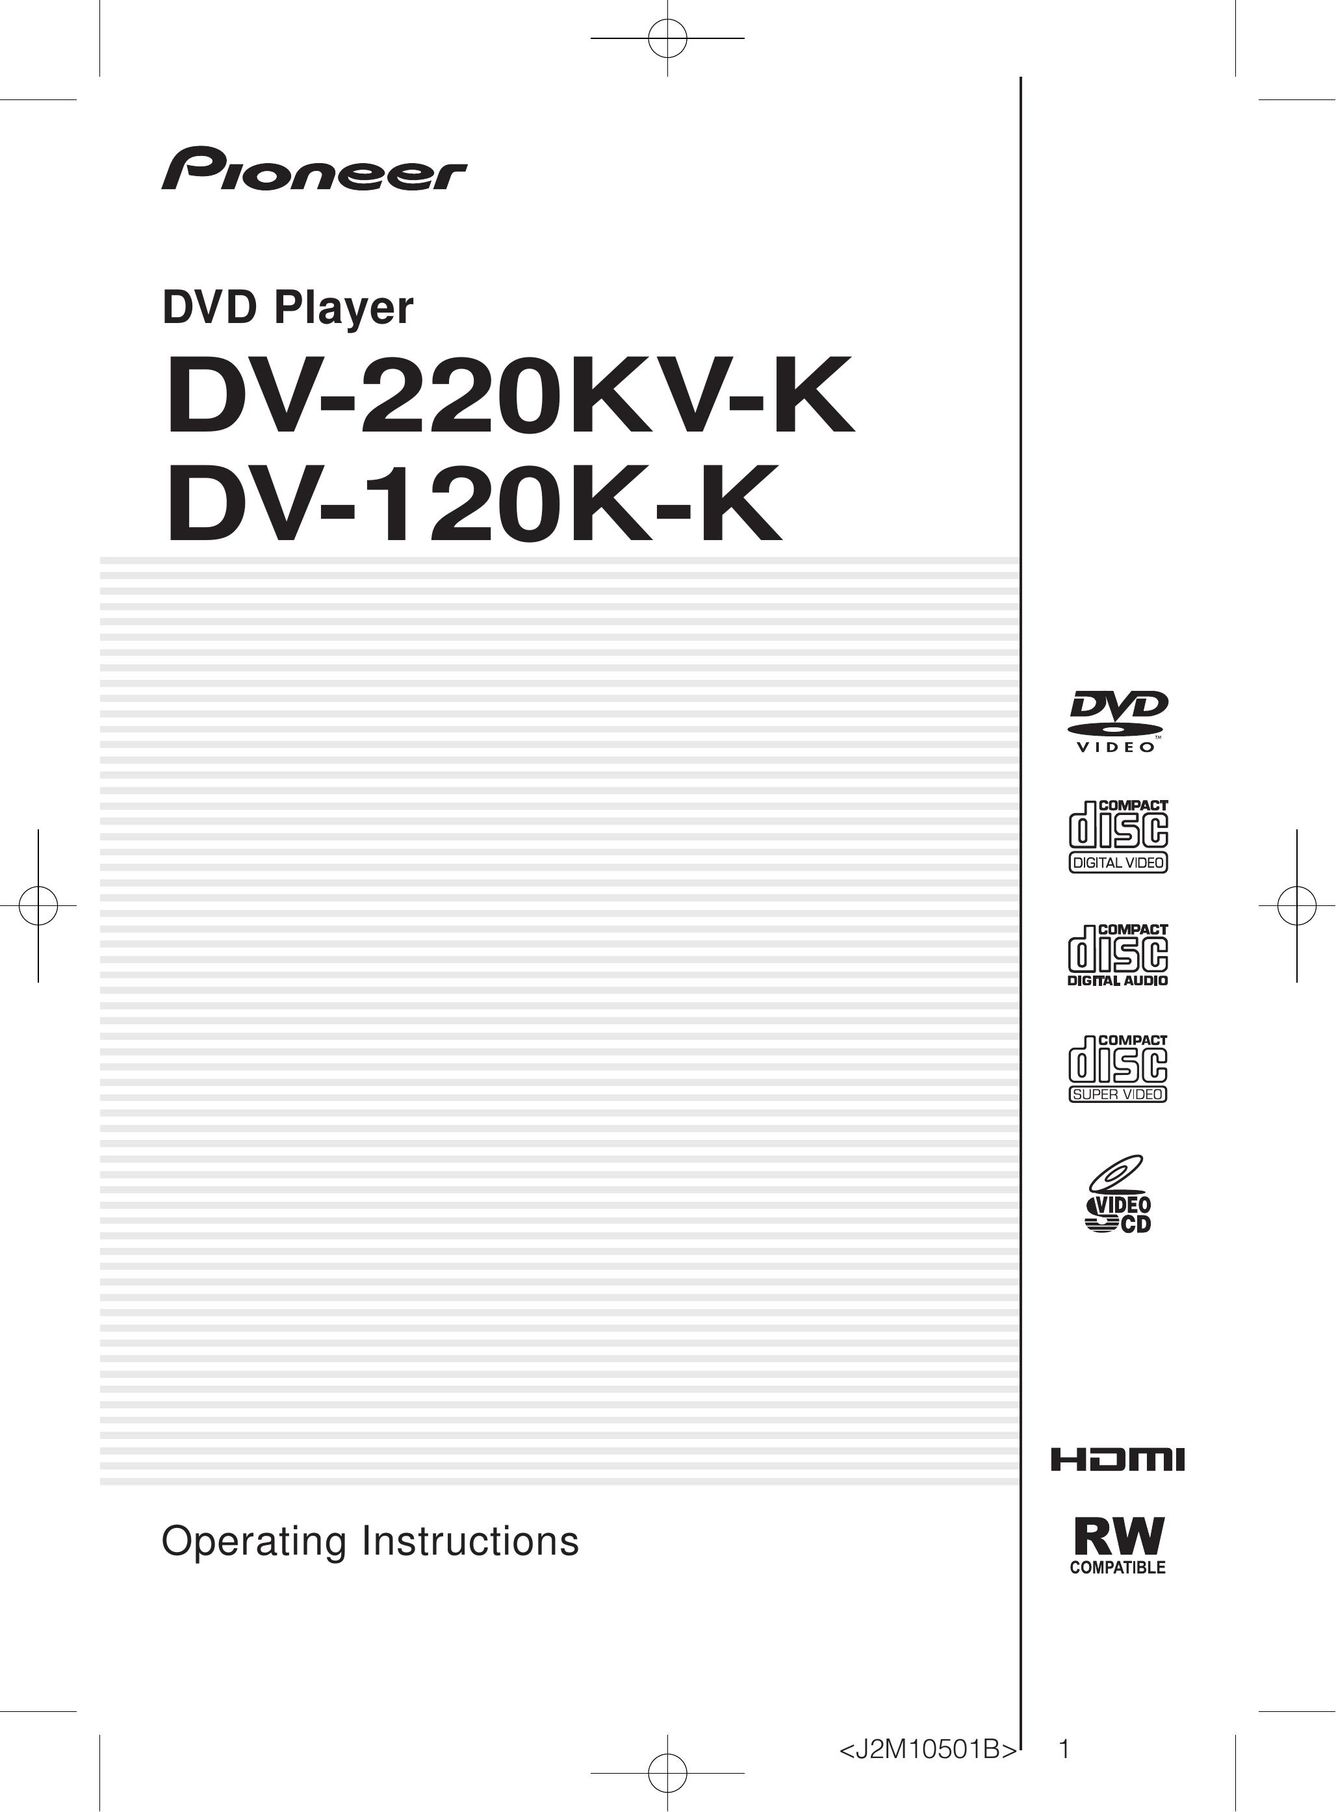 Panasonic DV-120K-K DVD Player User Manual